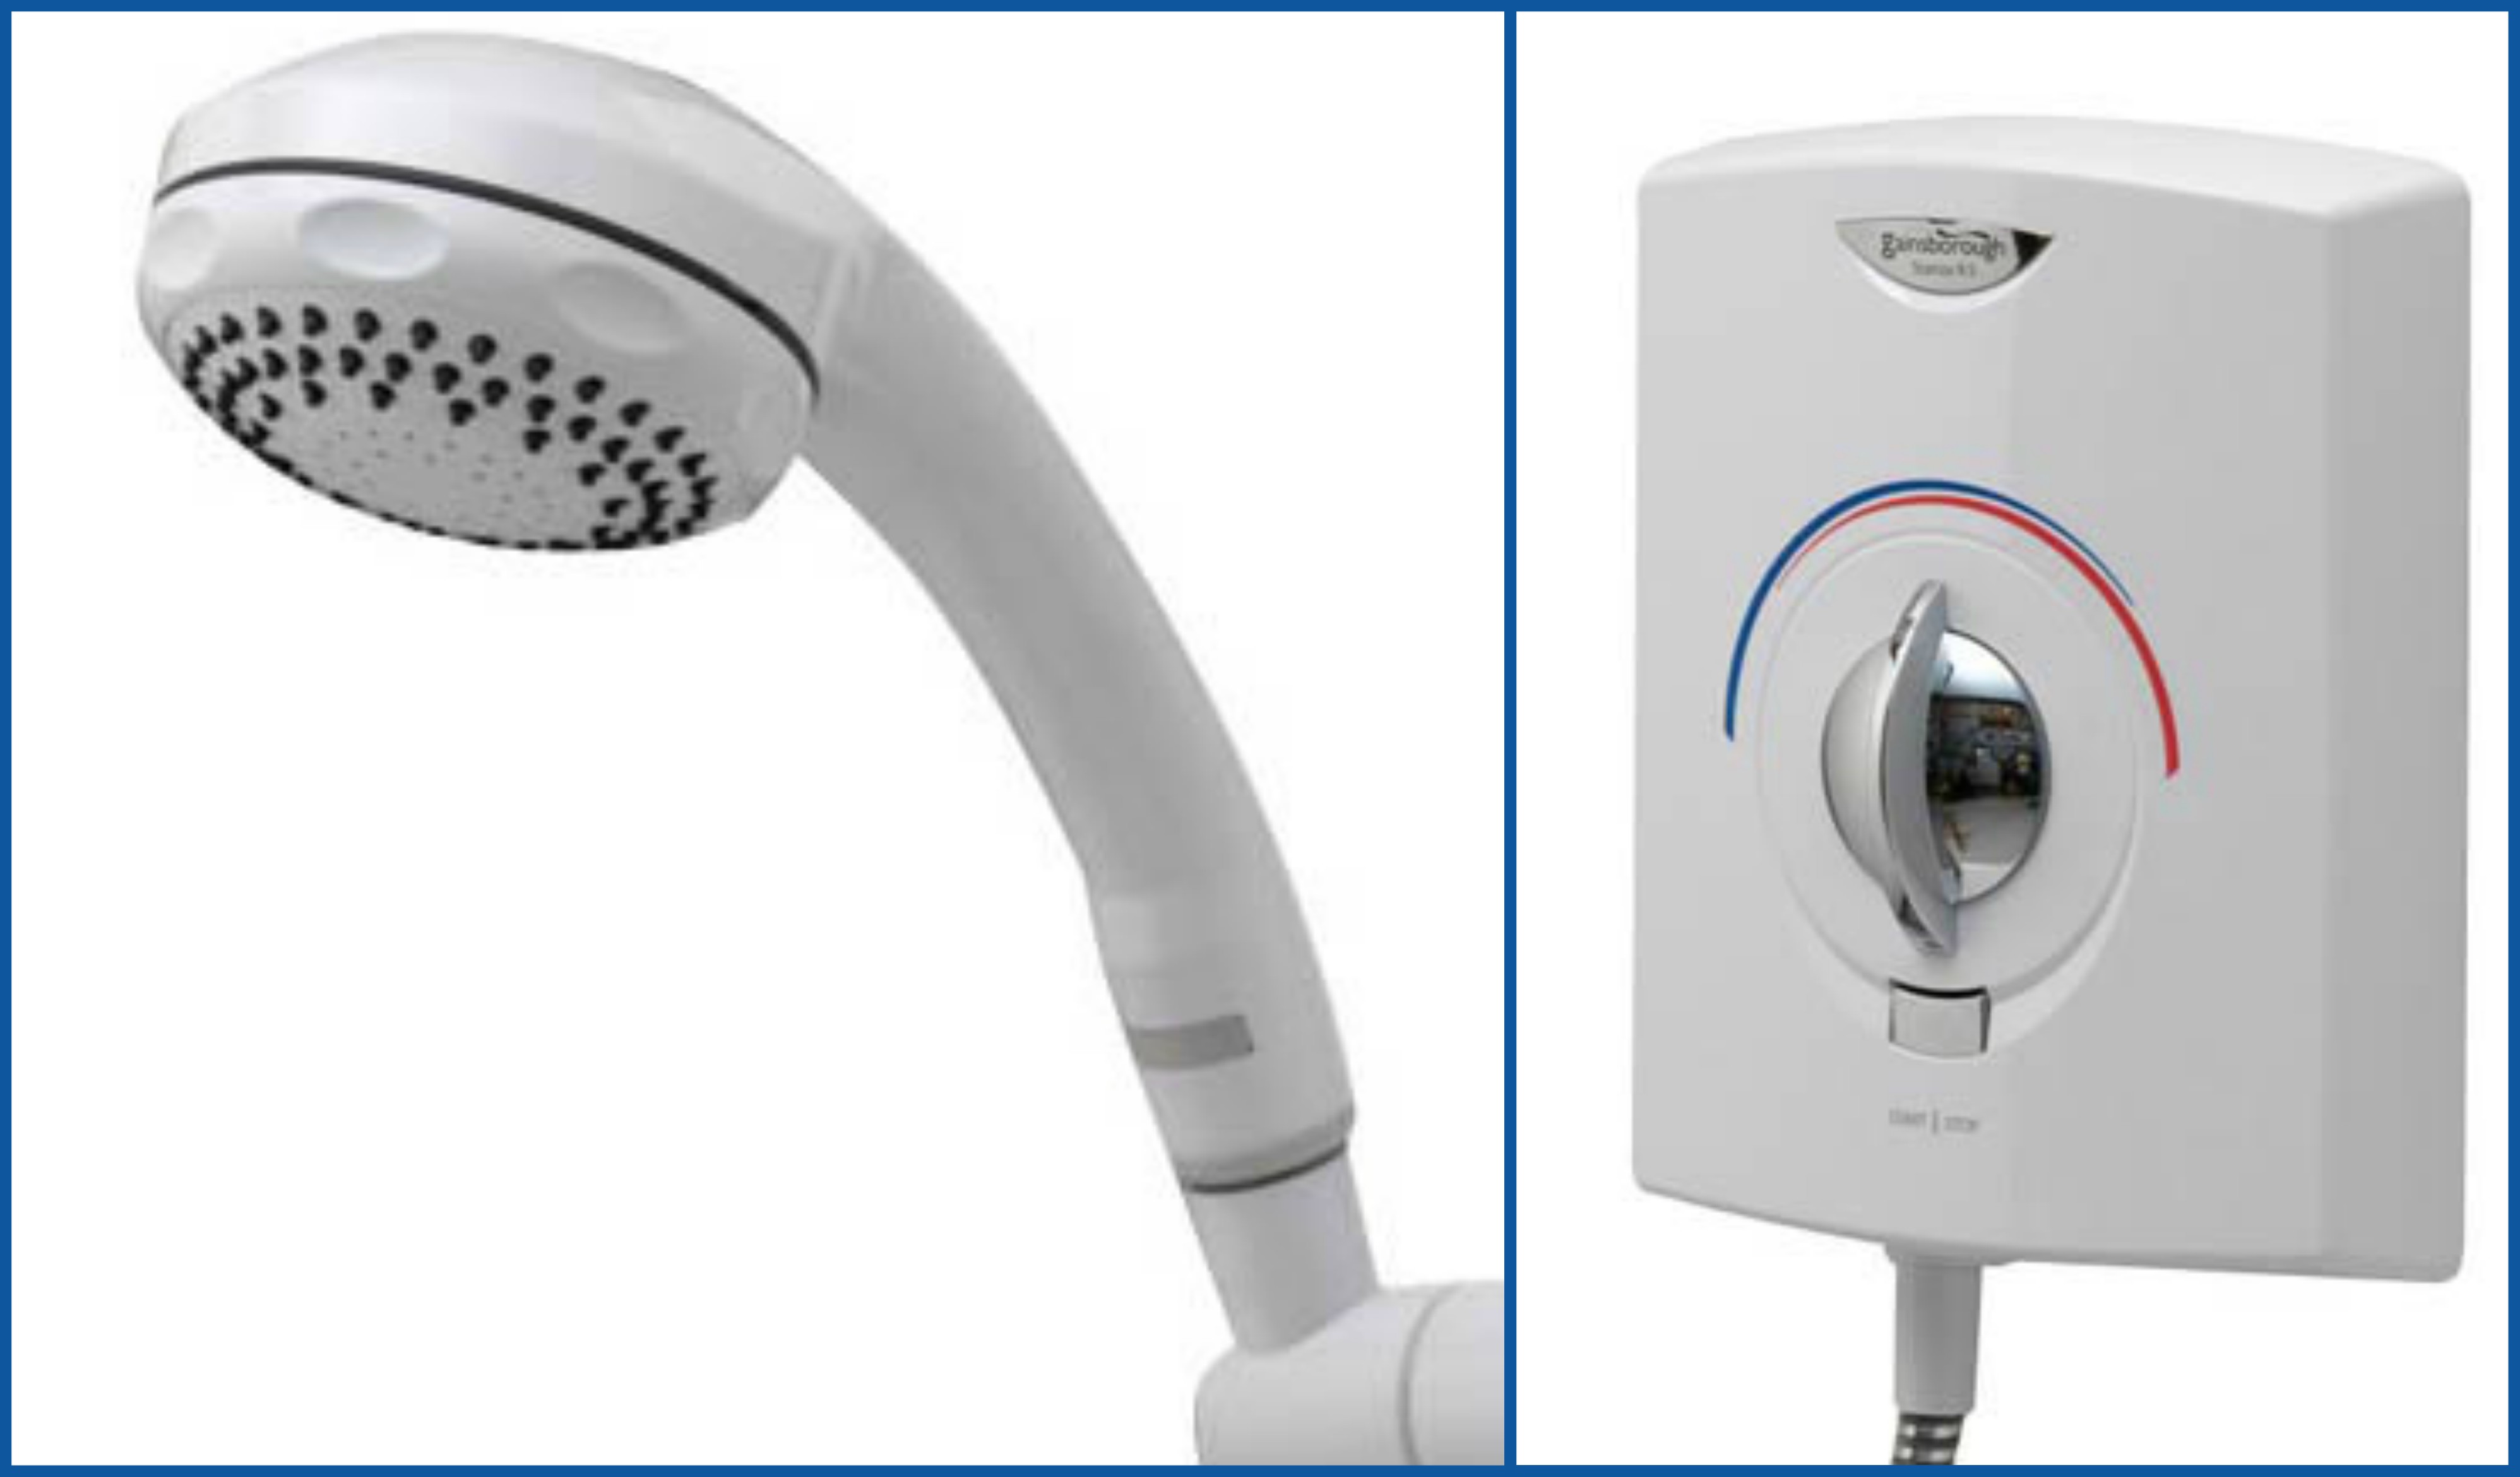 Gainsborough Stanza 8.5kw Electric Shower White & Chrome 3 Spray Modes 98221010 5016252210109 | eBay